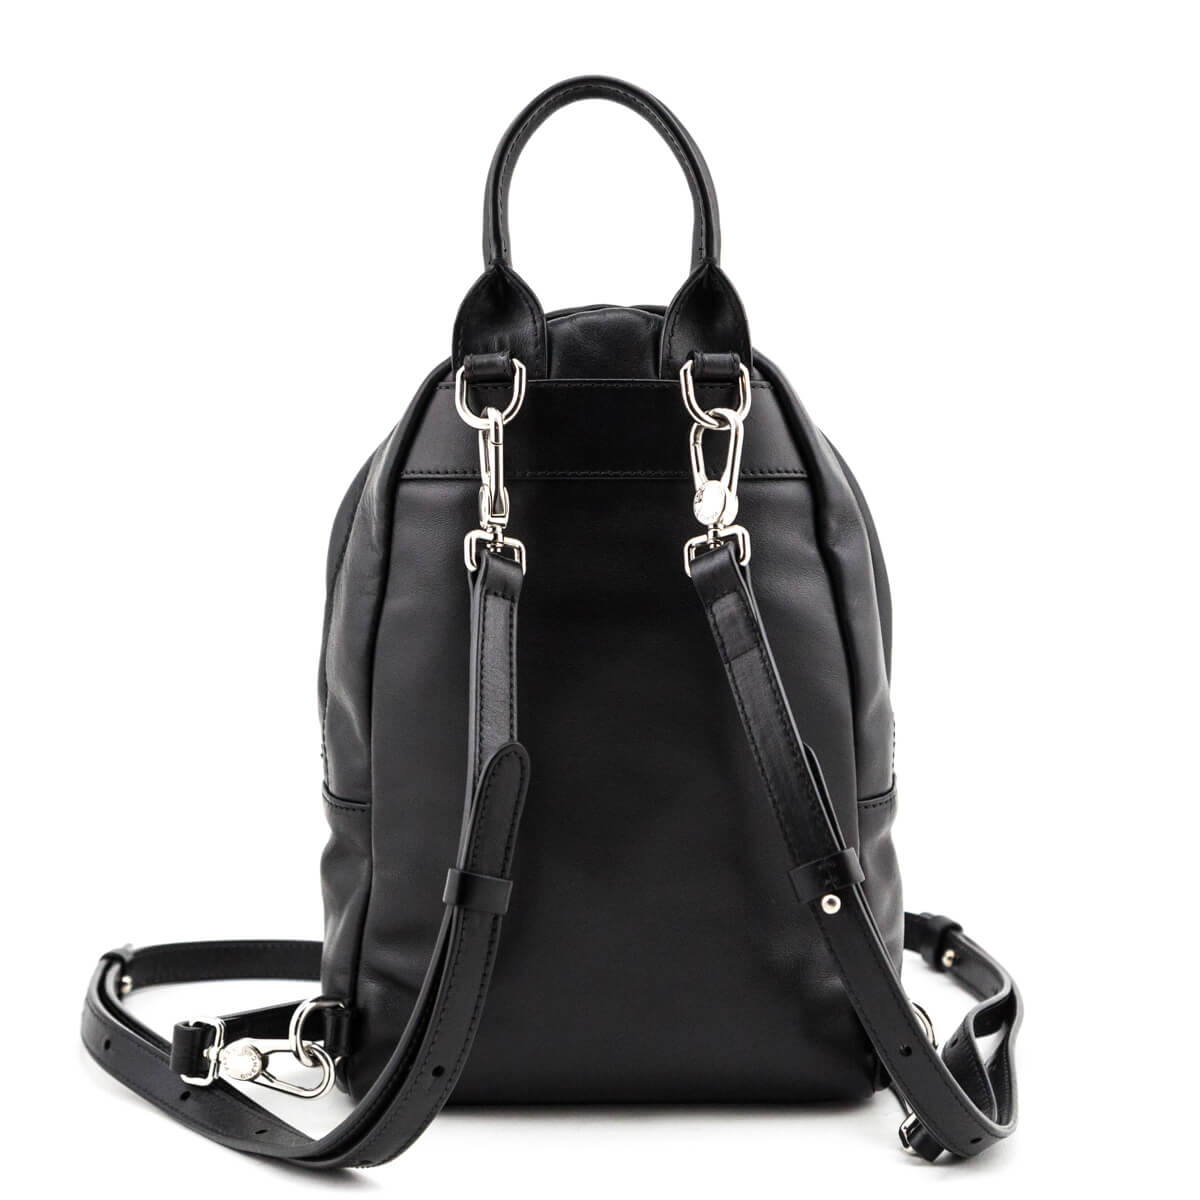 Vegan leather backpack Givenchy Black in Vegan leather - 32841474